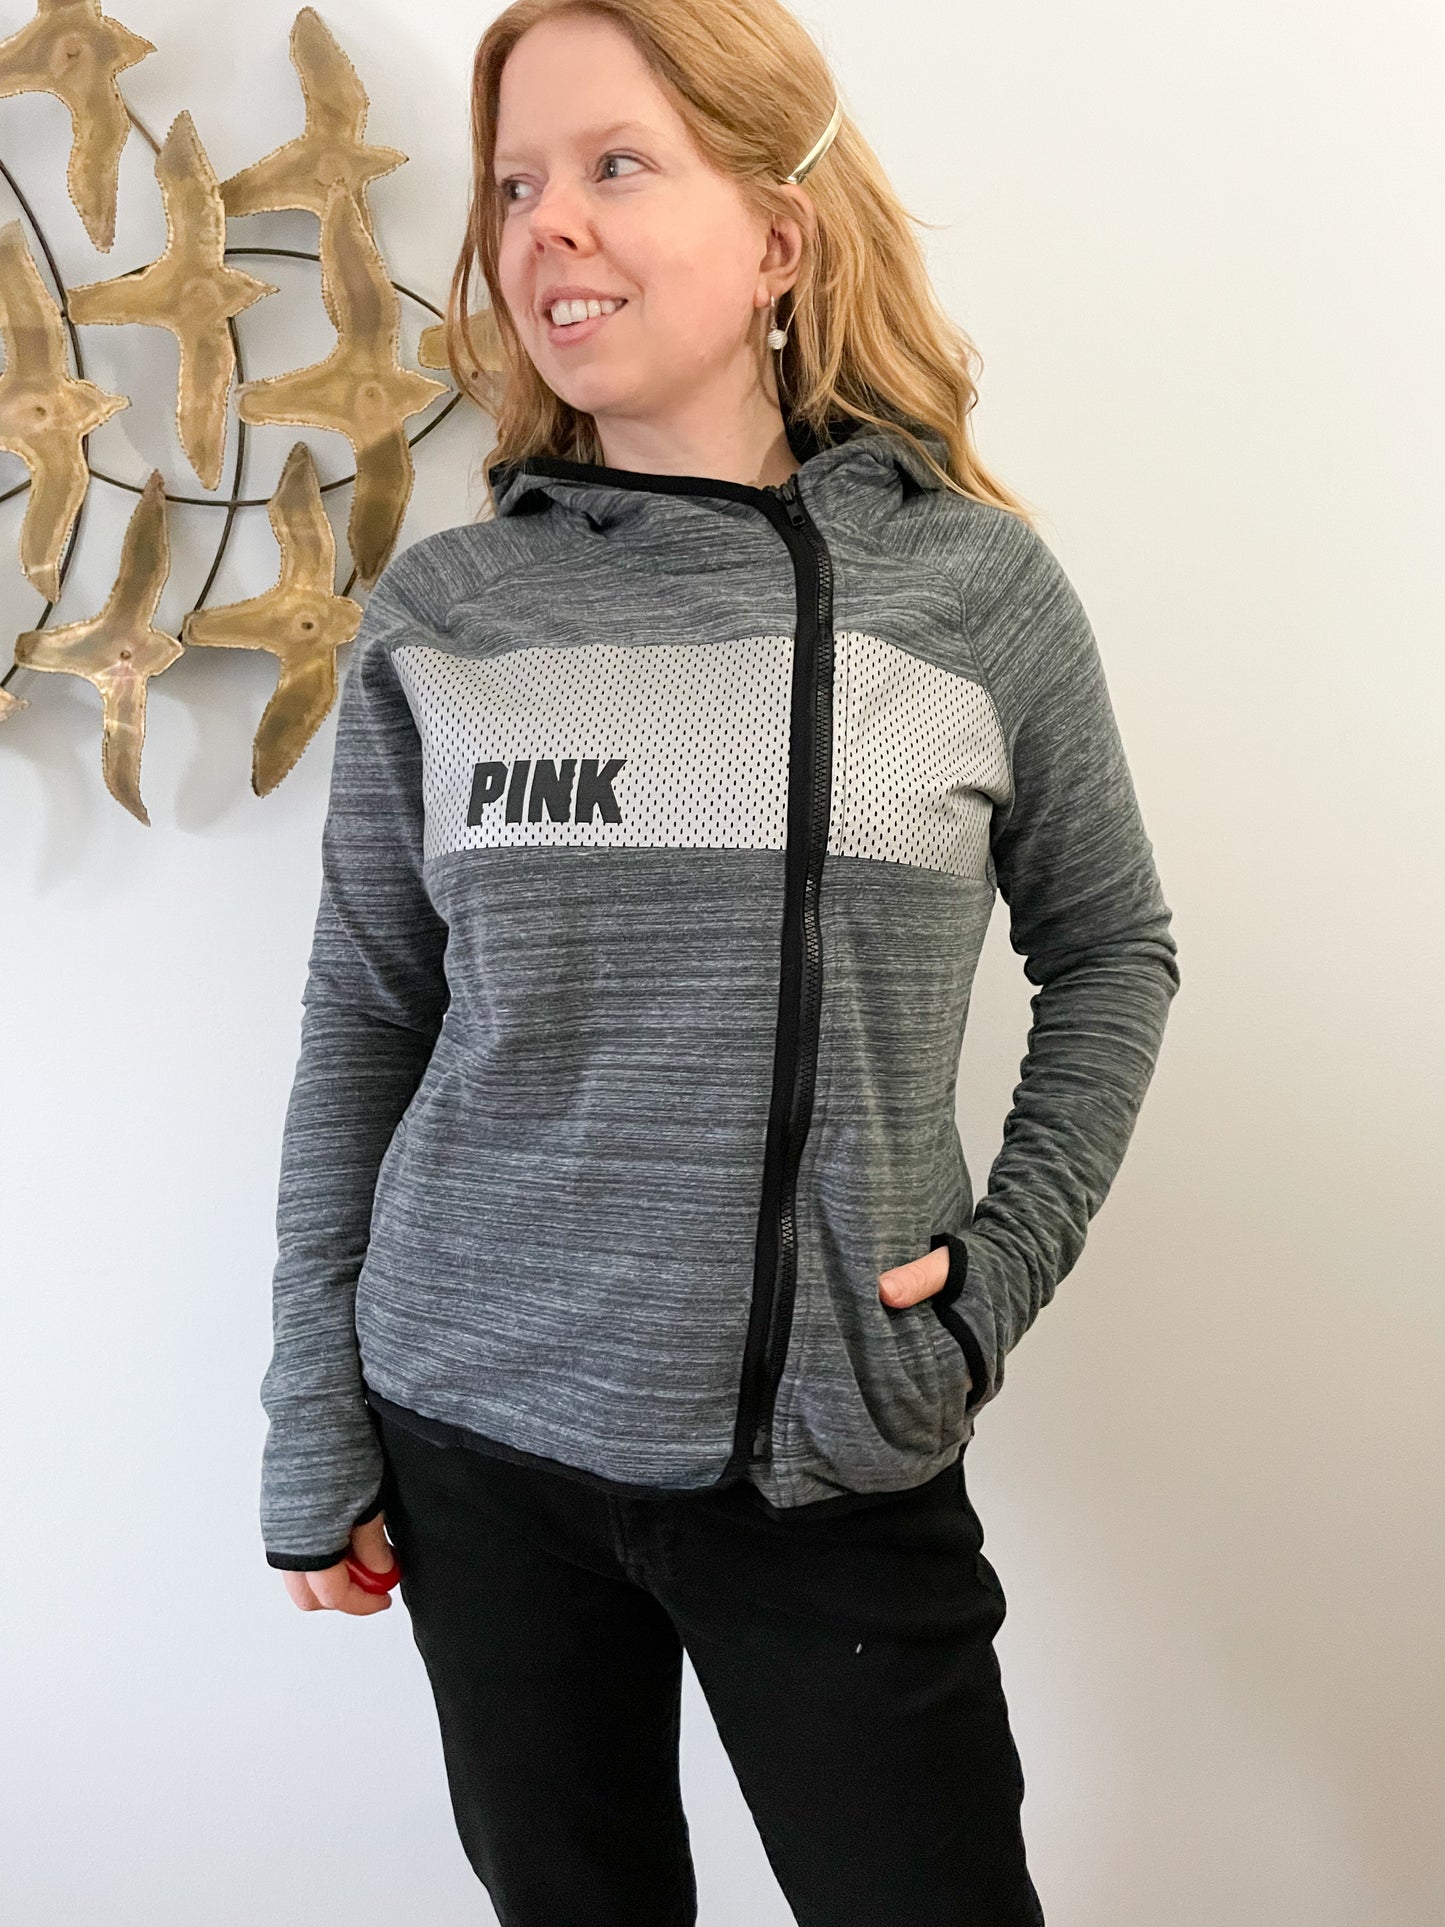 PINK Victoria's Secret Grey Asymmetrical Zipper Hoodie Sweater - S/M